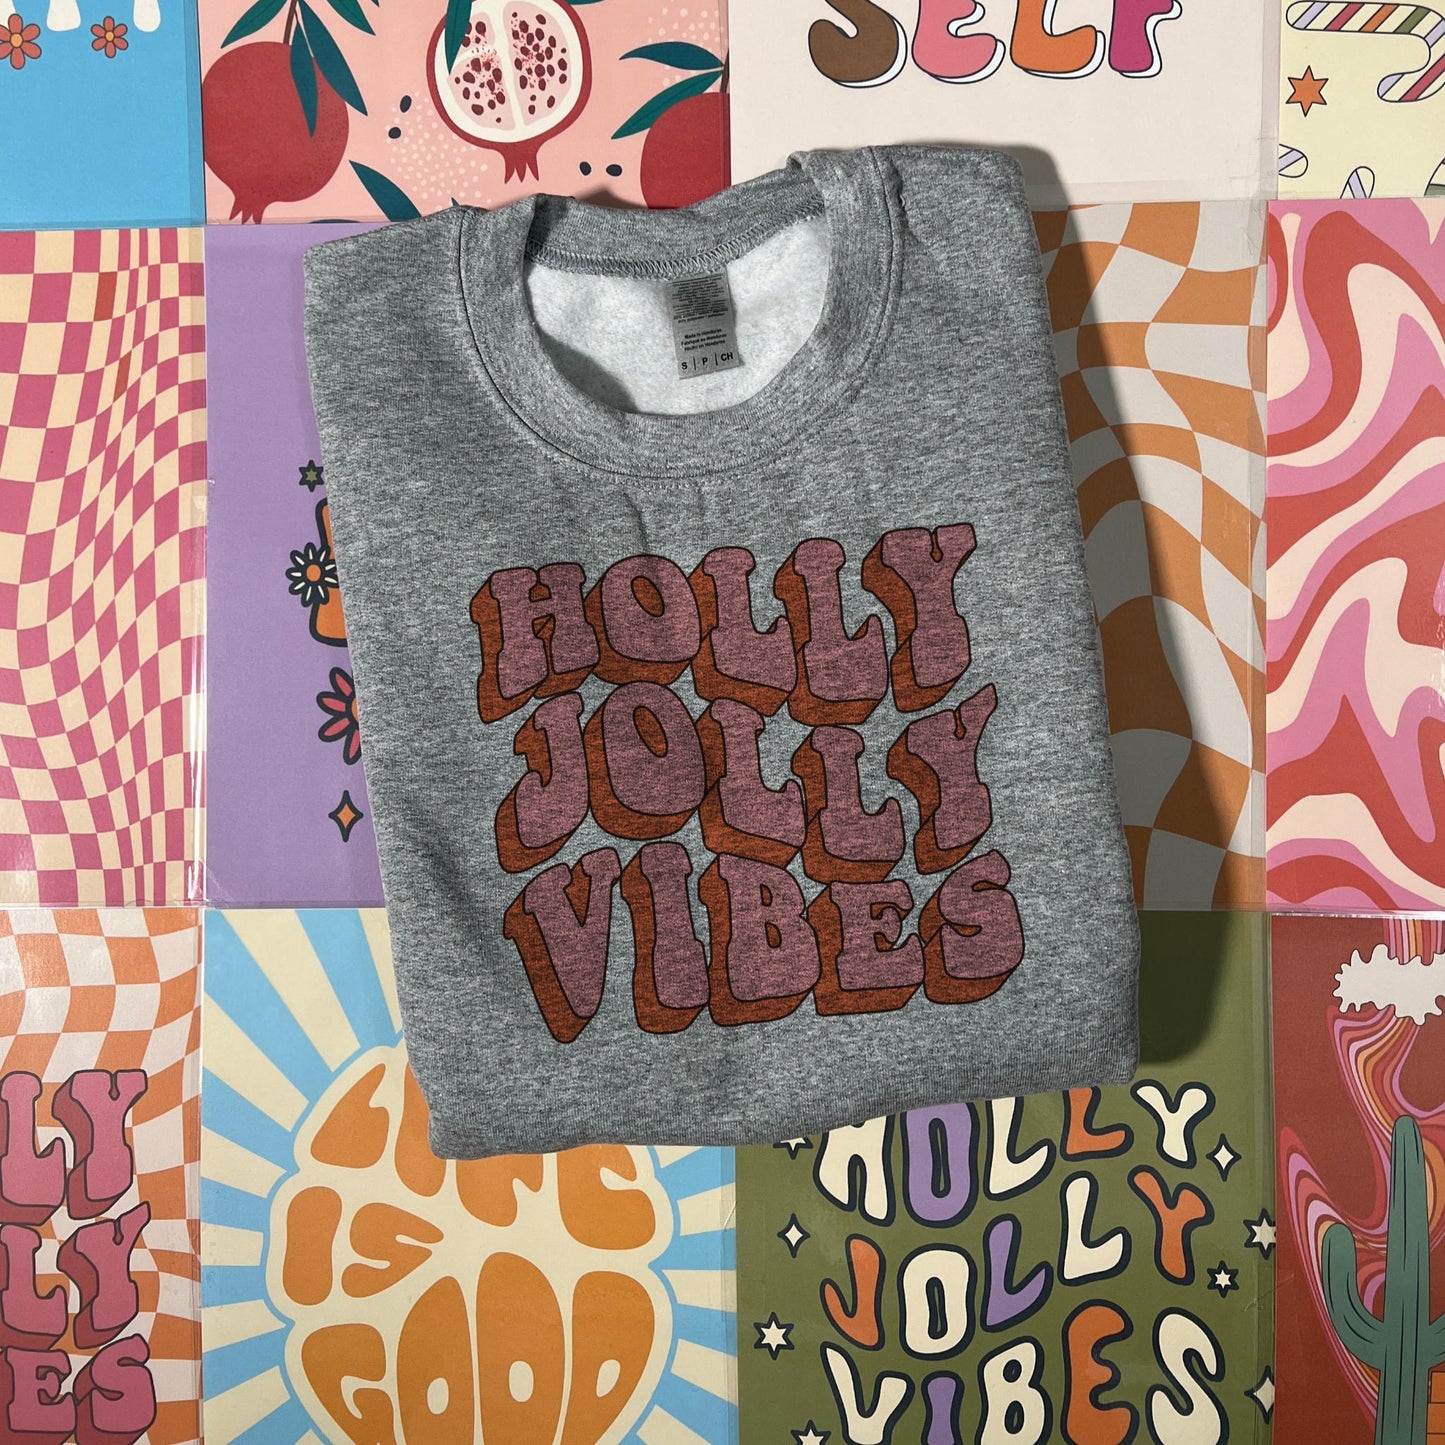 Block Holly Jolly Vibes Sweatshirt